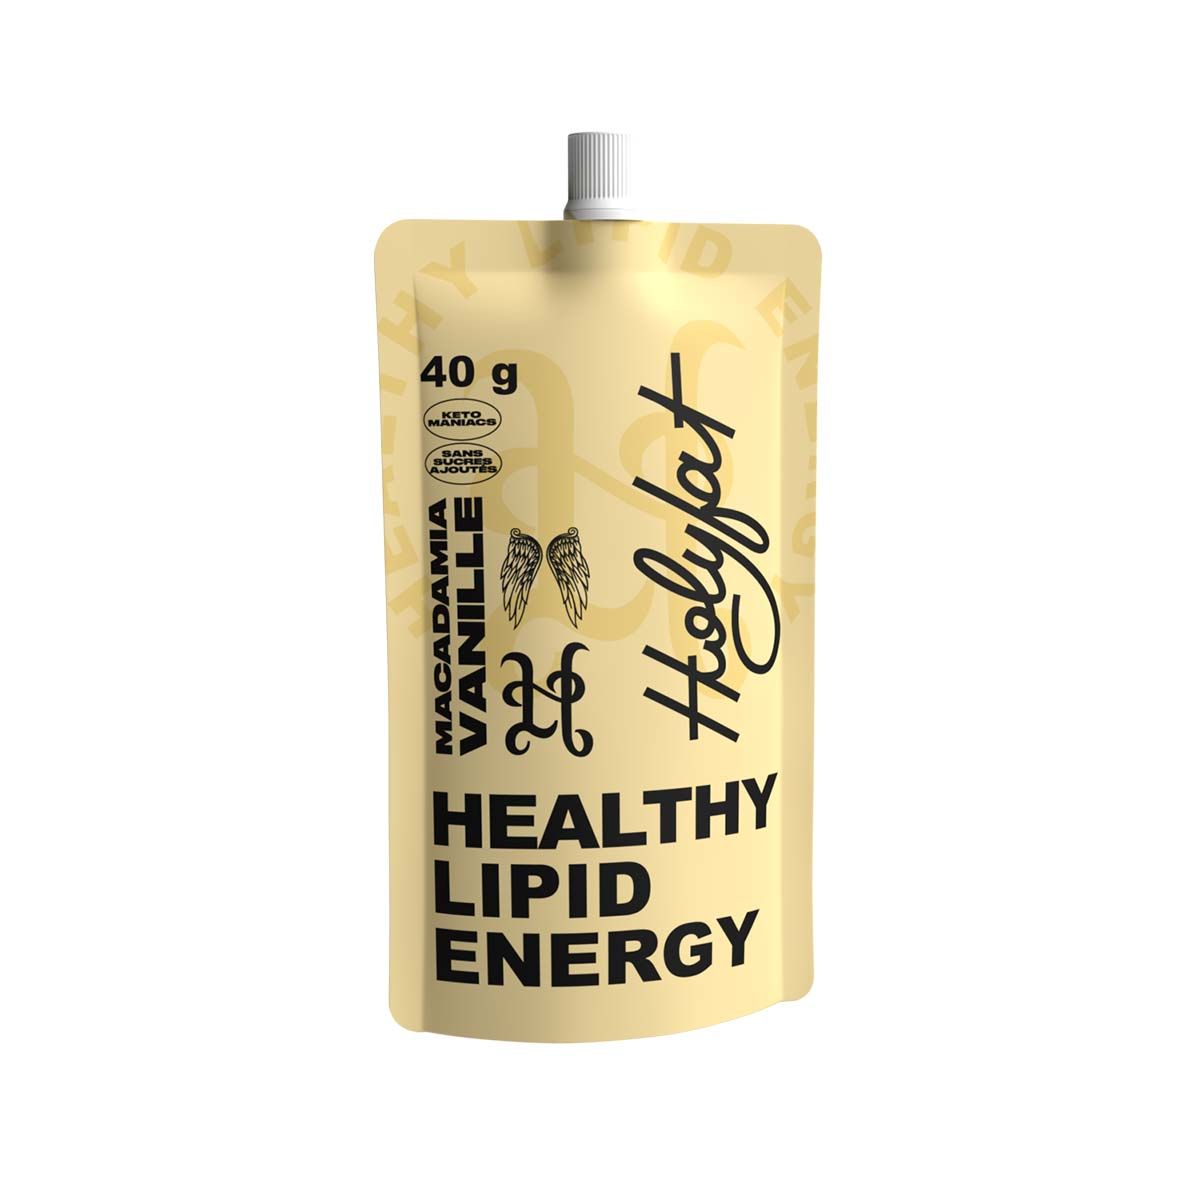 Holyfat energy purée - Macadamia nut, vanilla